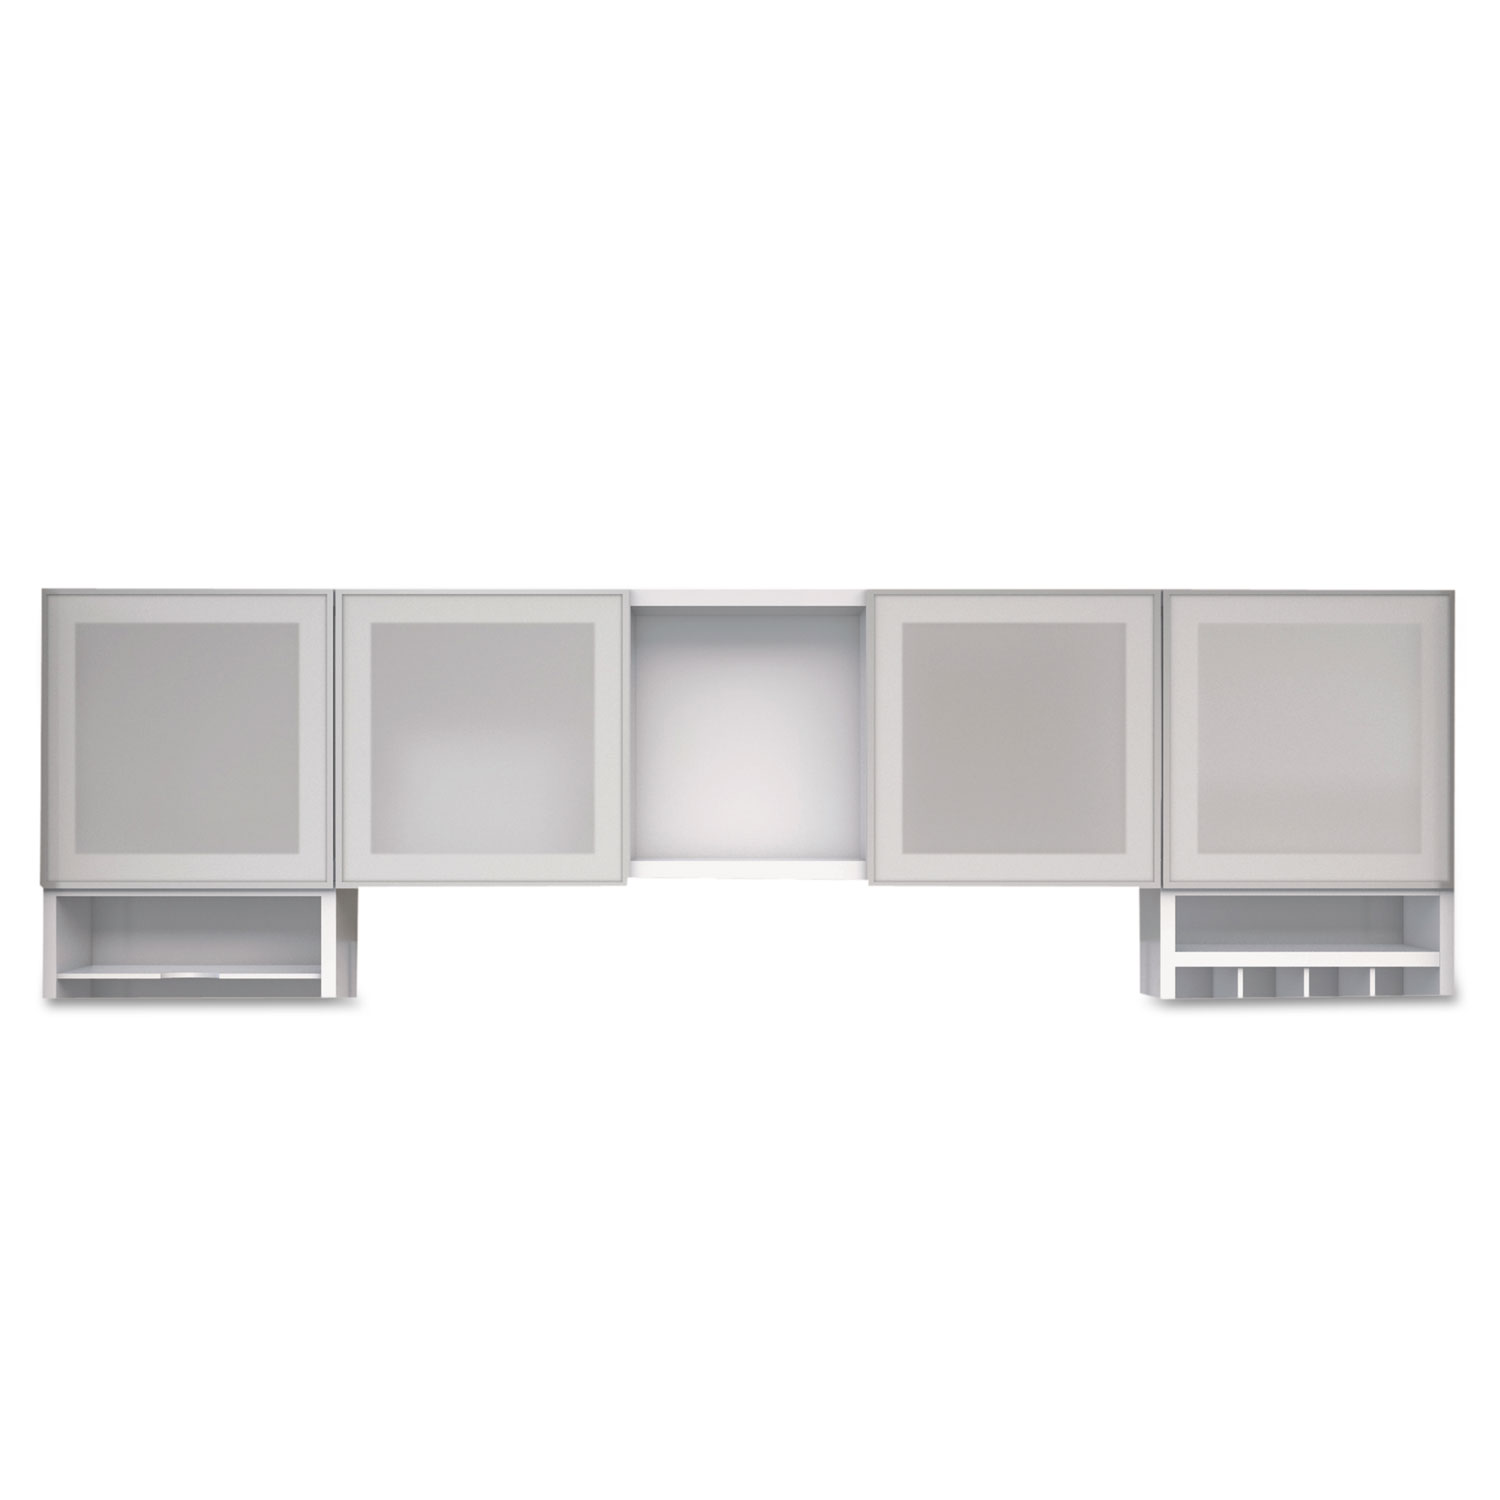  Safco EZH72FAGZ e5 Series Overhead Storage Cabinet, 72w x 15d x 15h, White (MLNEZH72FAGZ) 